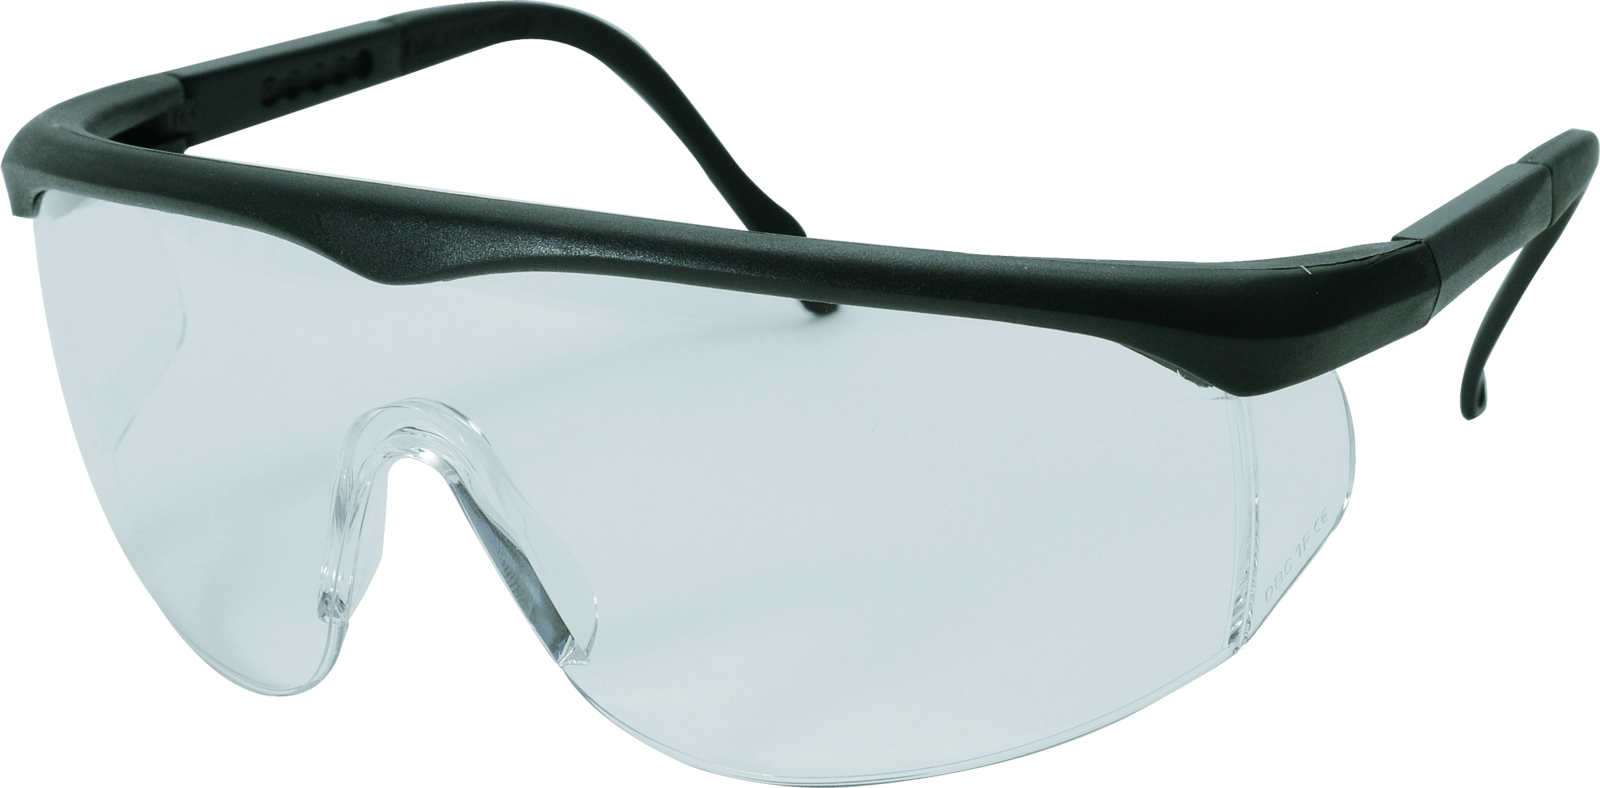 OX-ON Eyewear Eyepro Comfort Clear 334.24